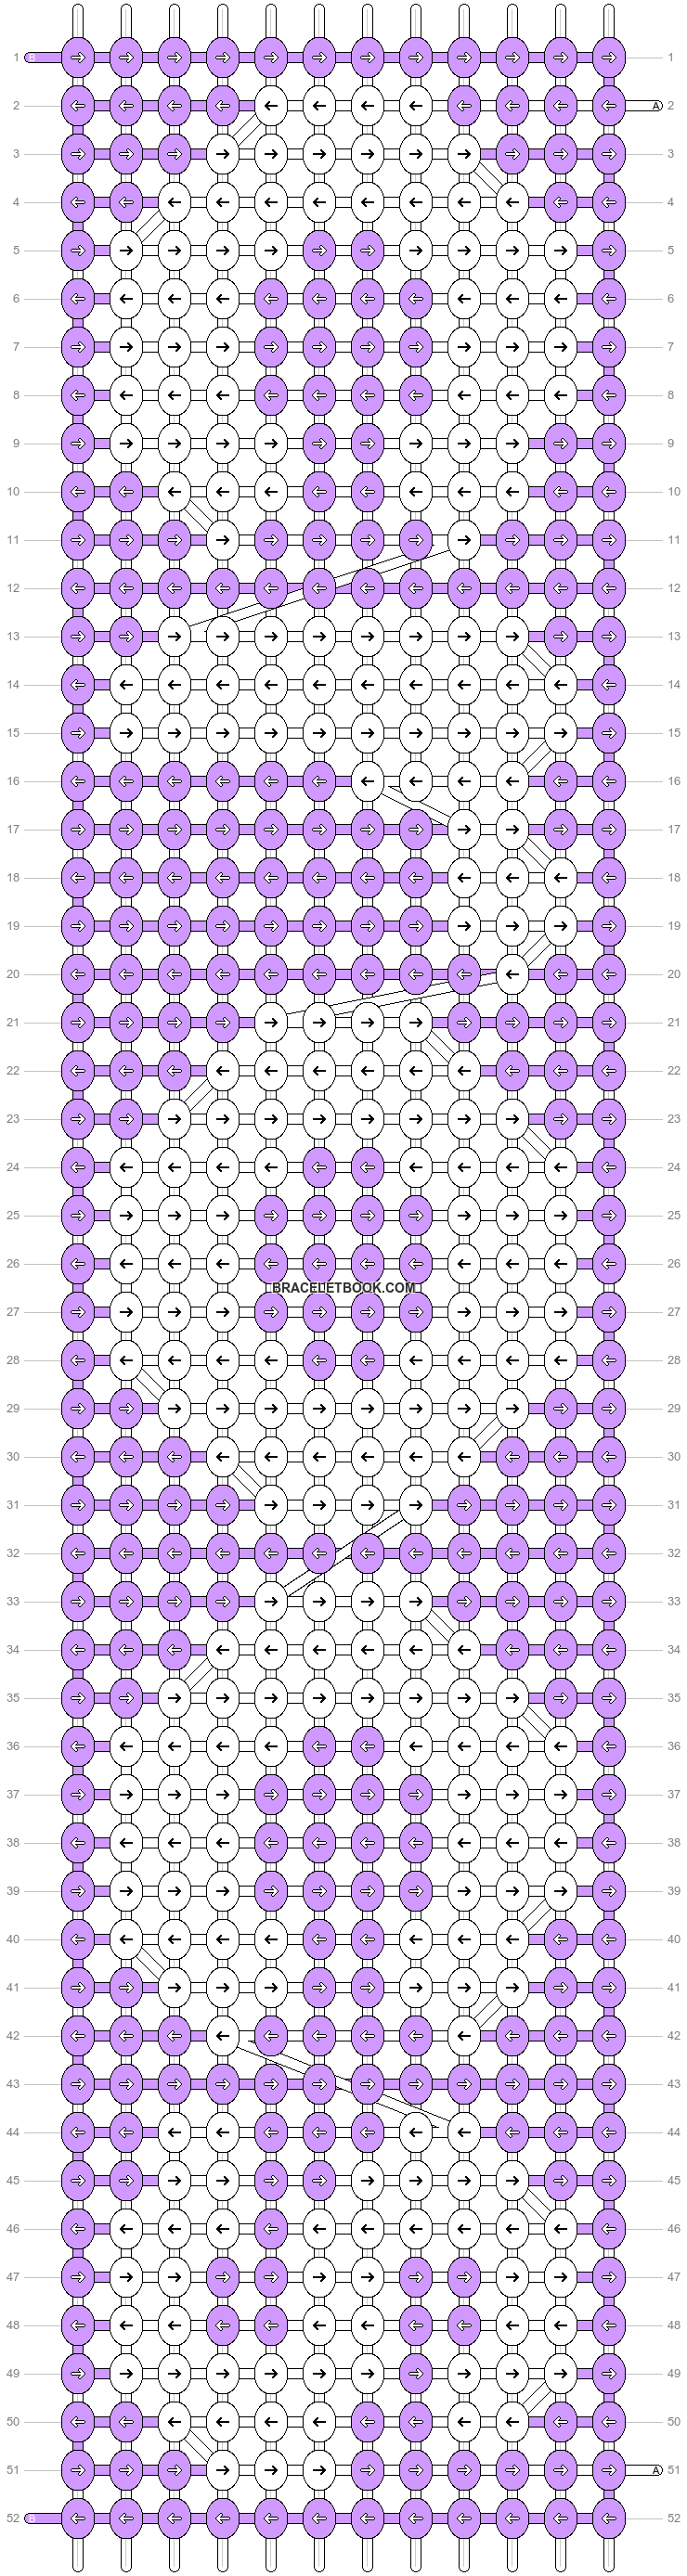 Alpha pattern #64184 variation #118424 pattern